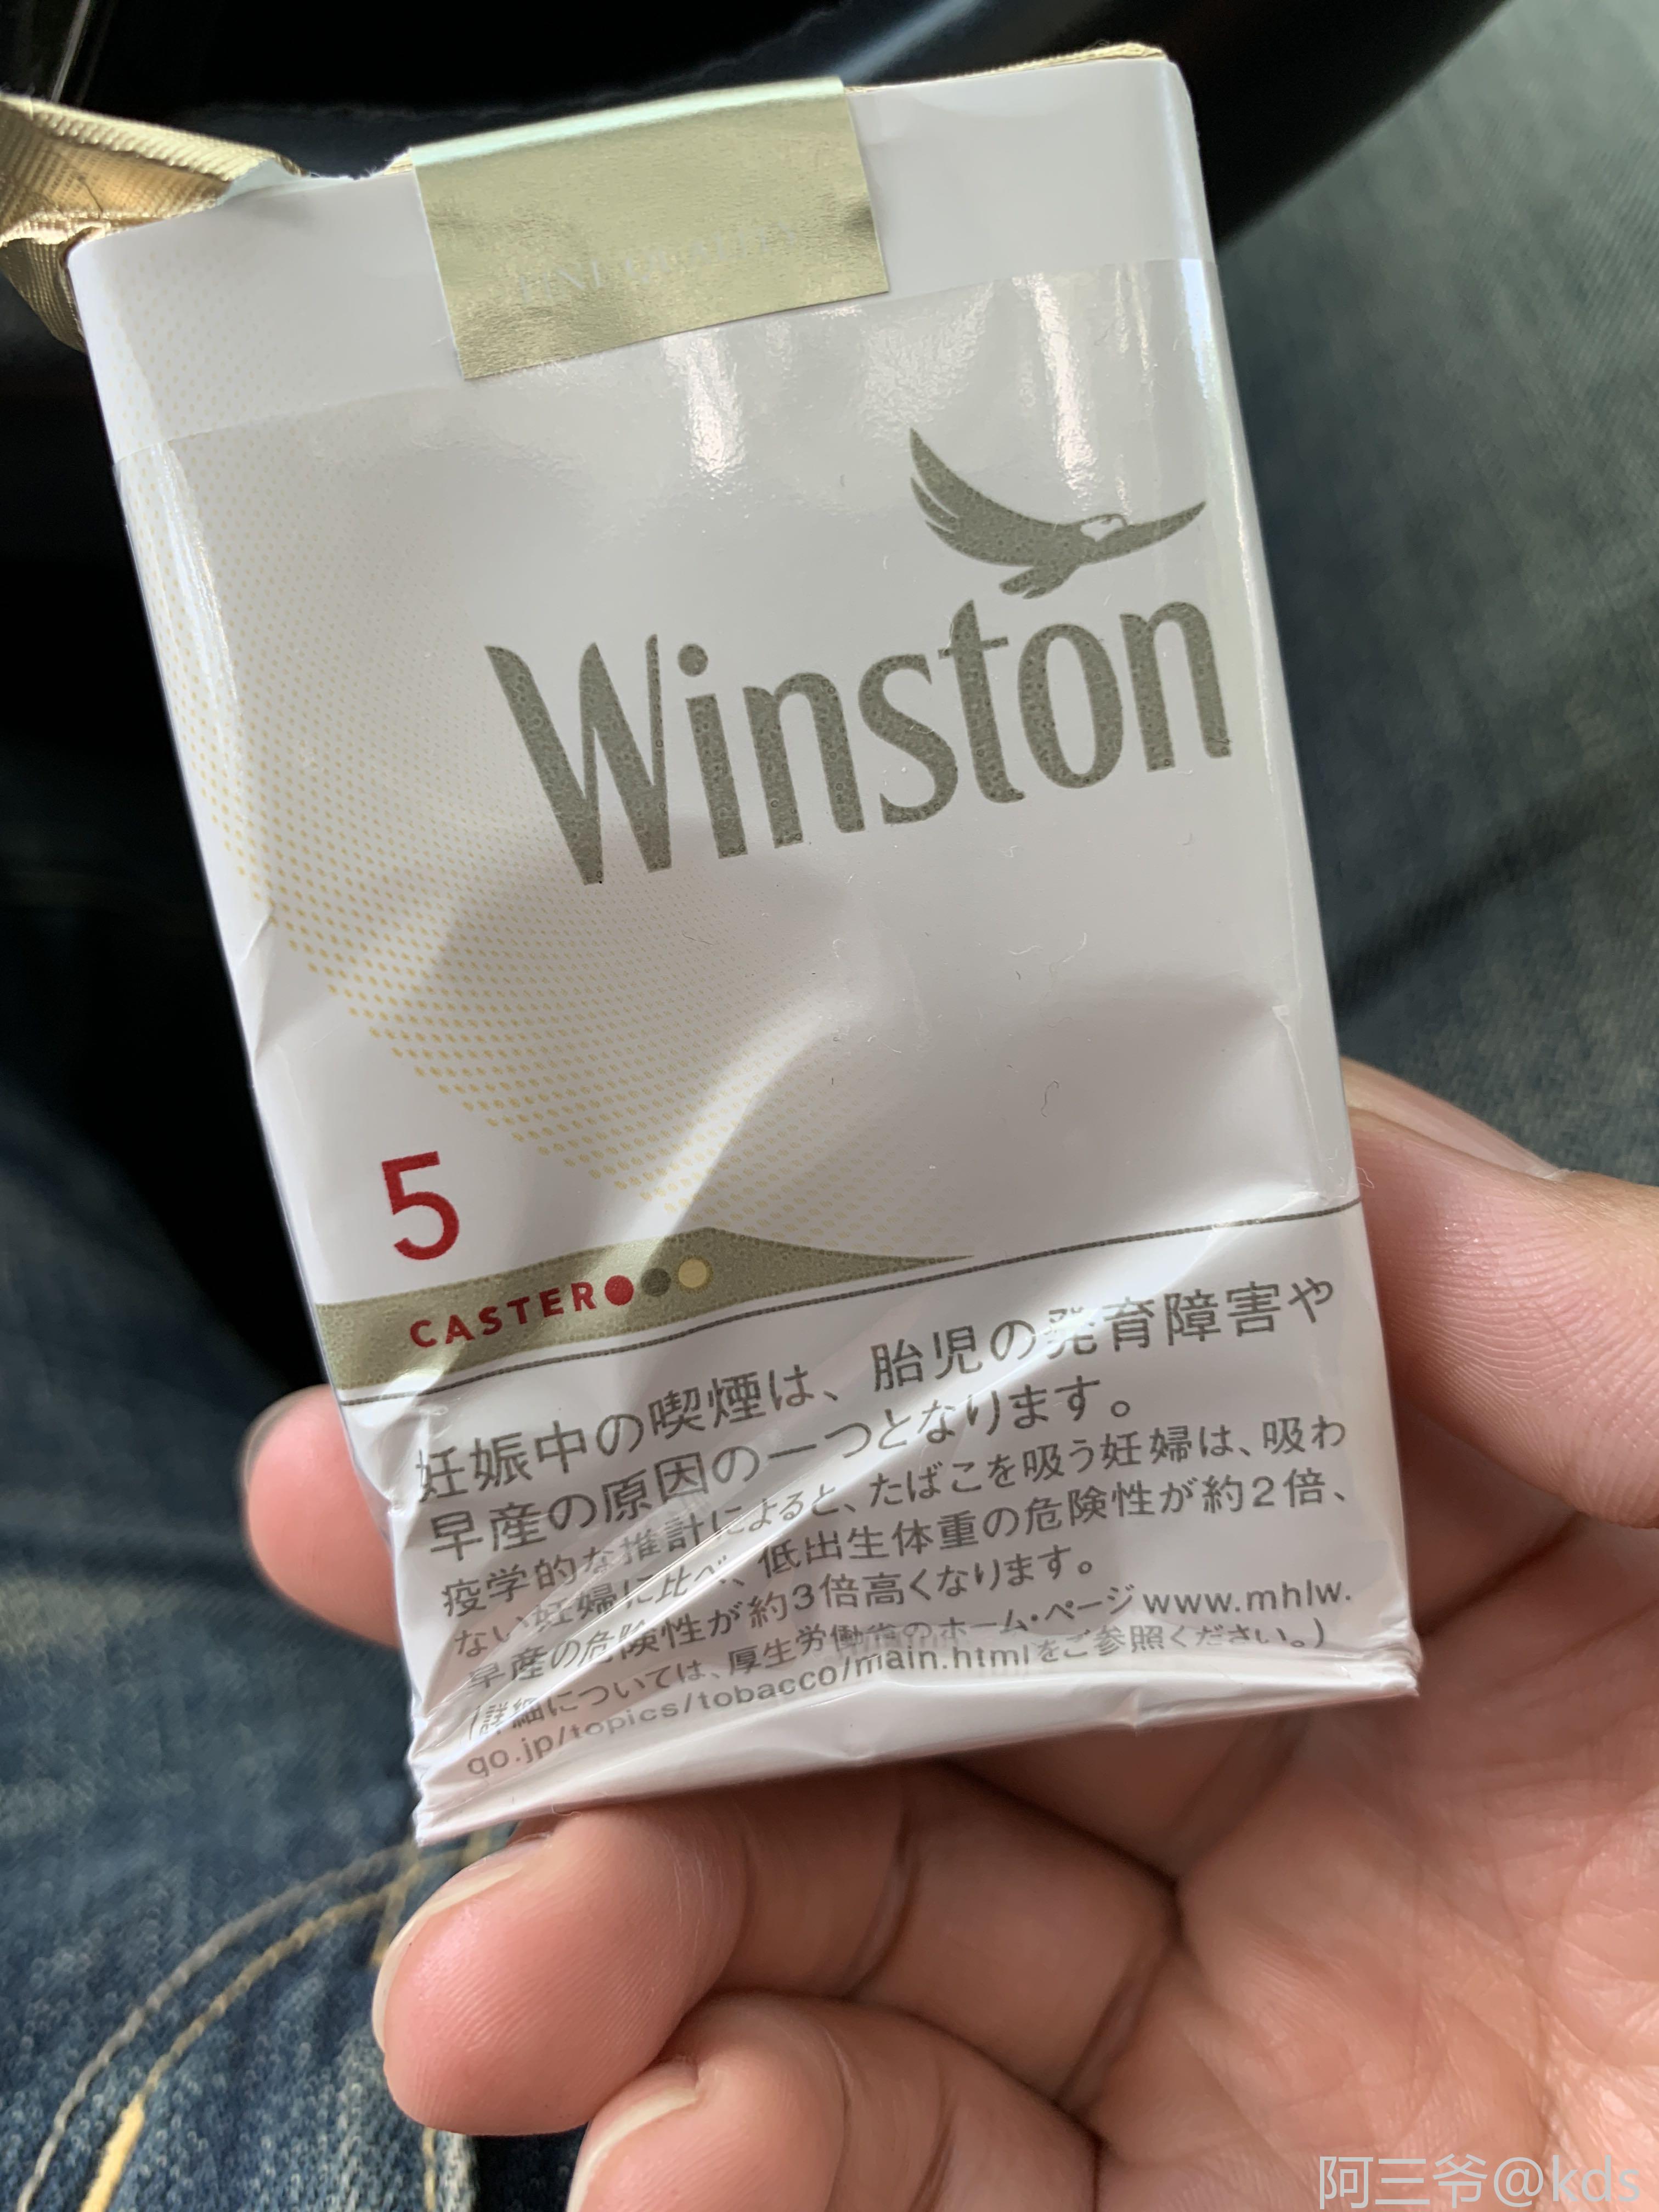 winston香烟价格图片